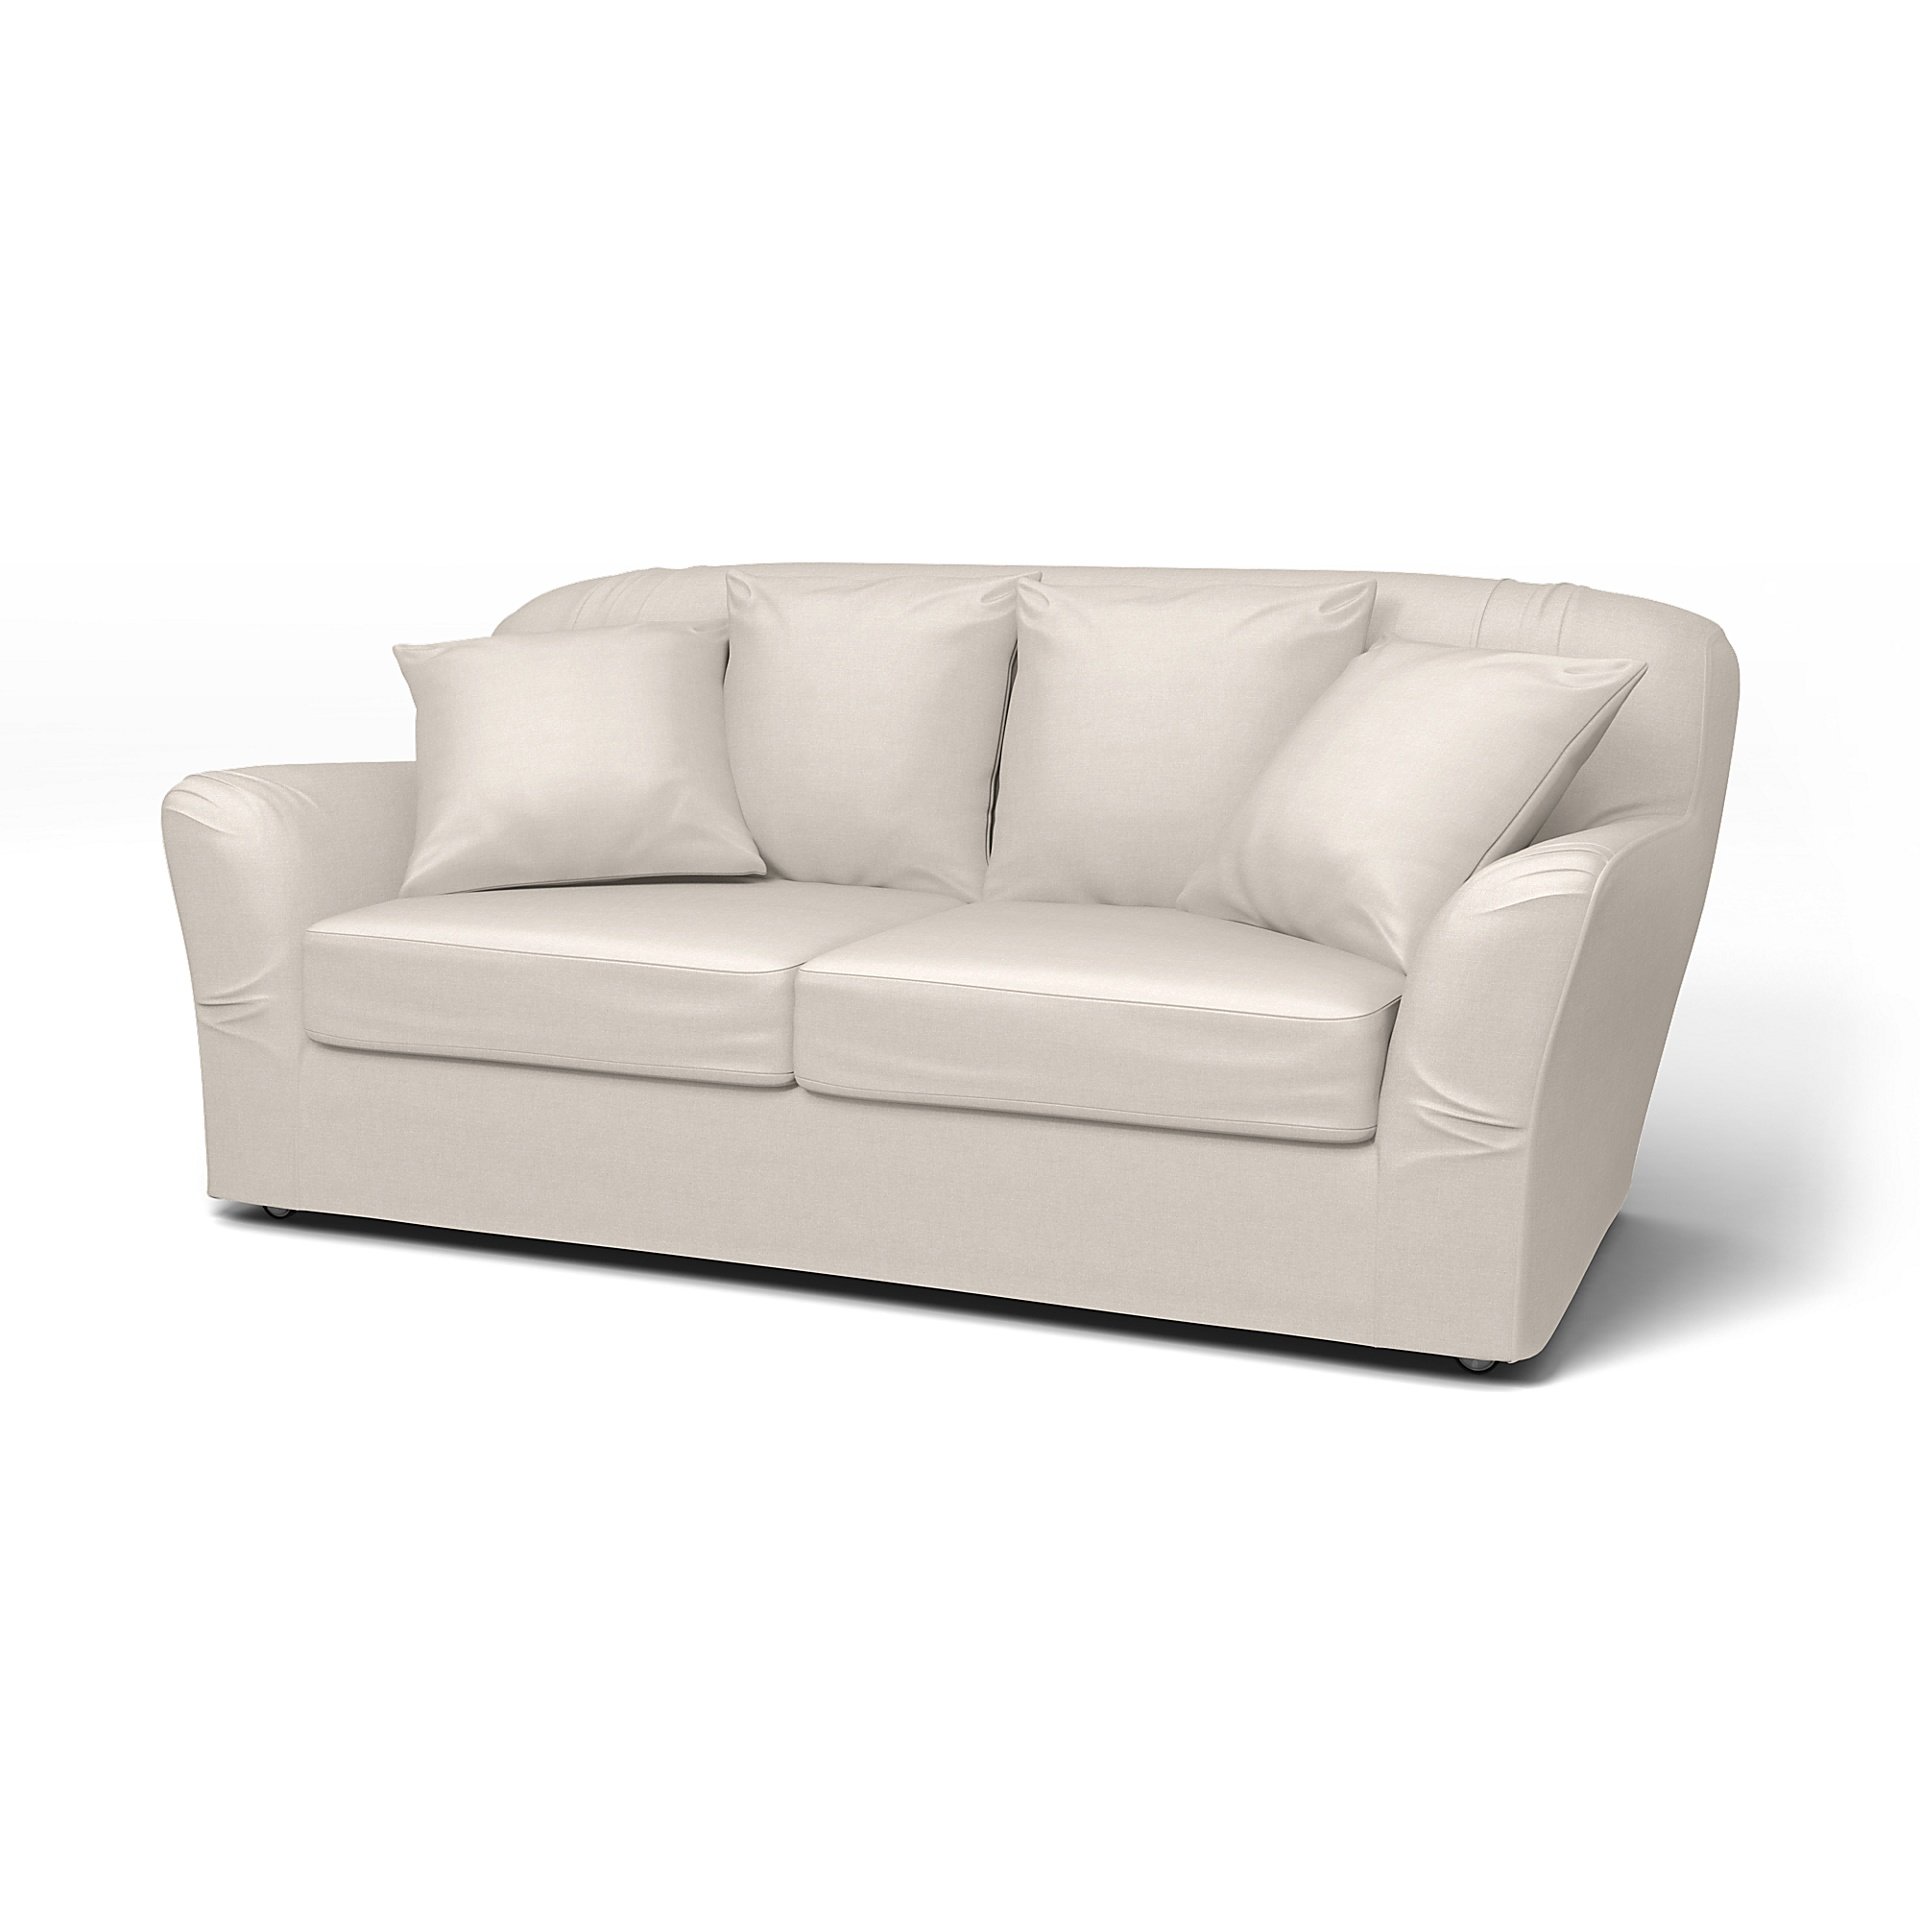 IKEA - Tomelilla 2 seater sofa, Chalk, Linen - Bemz